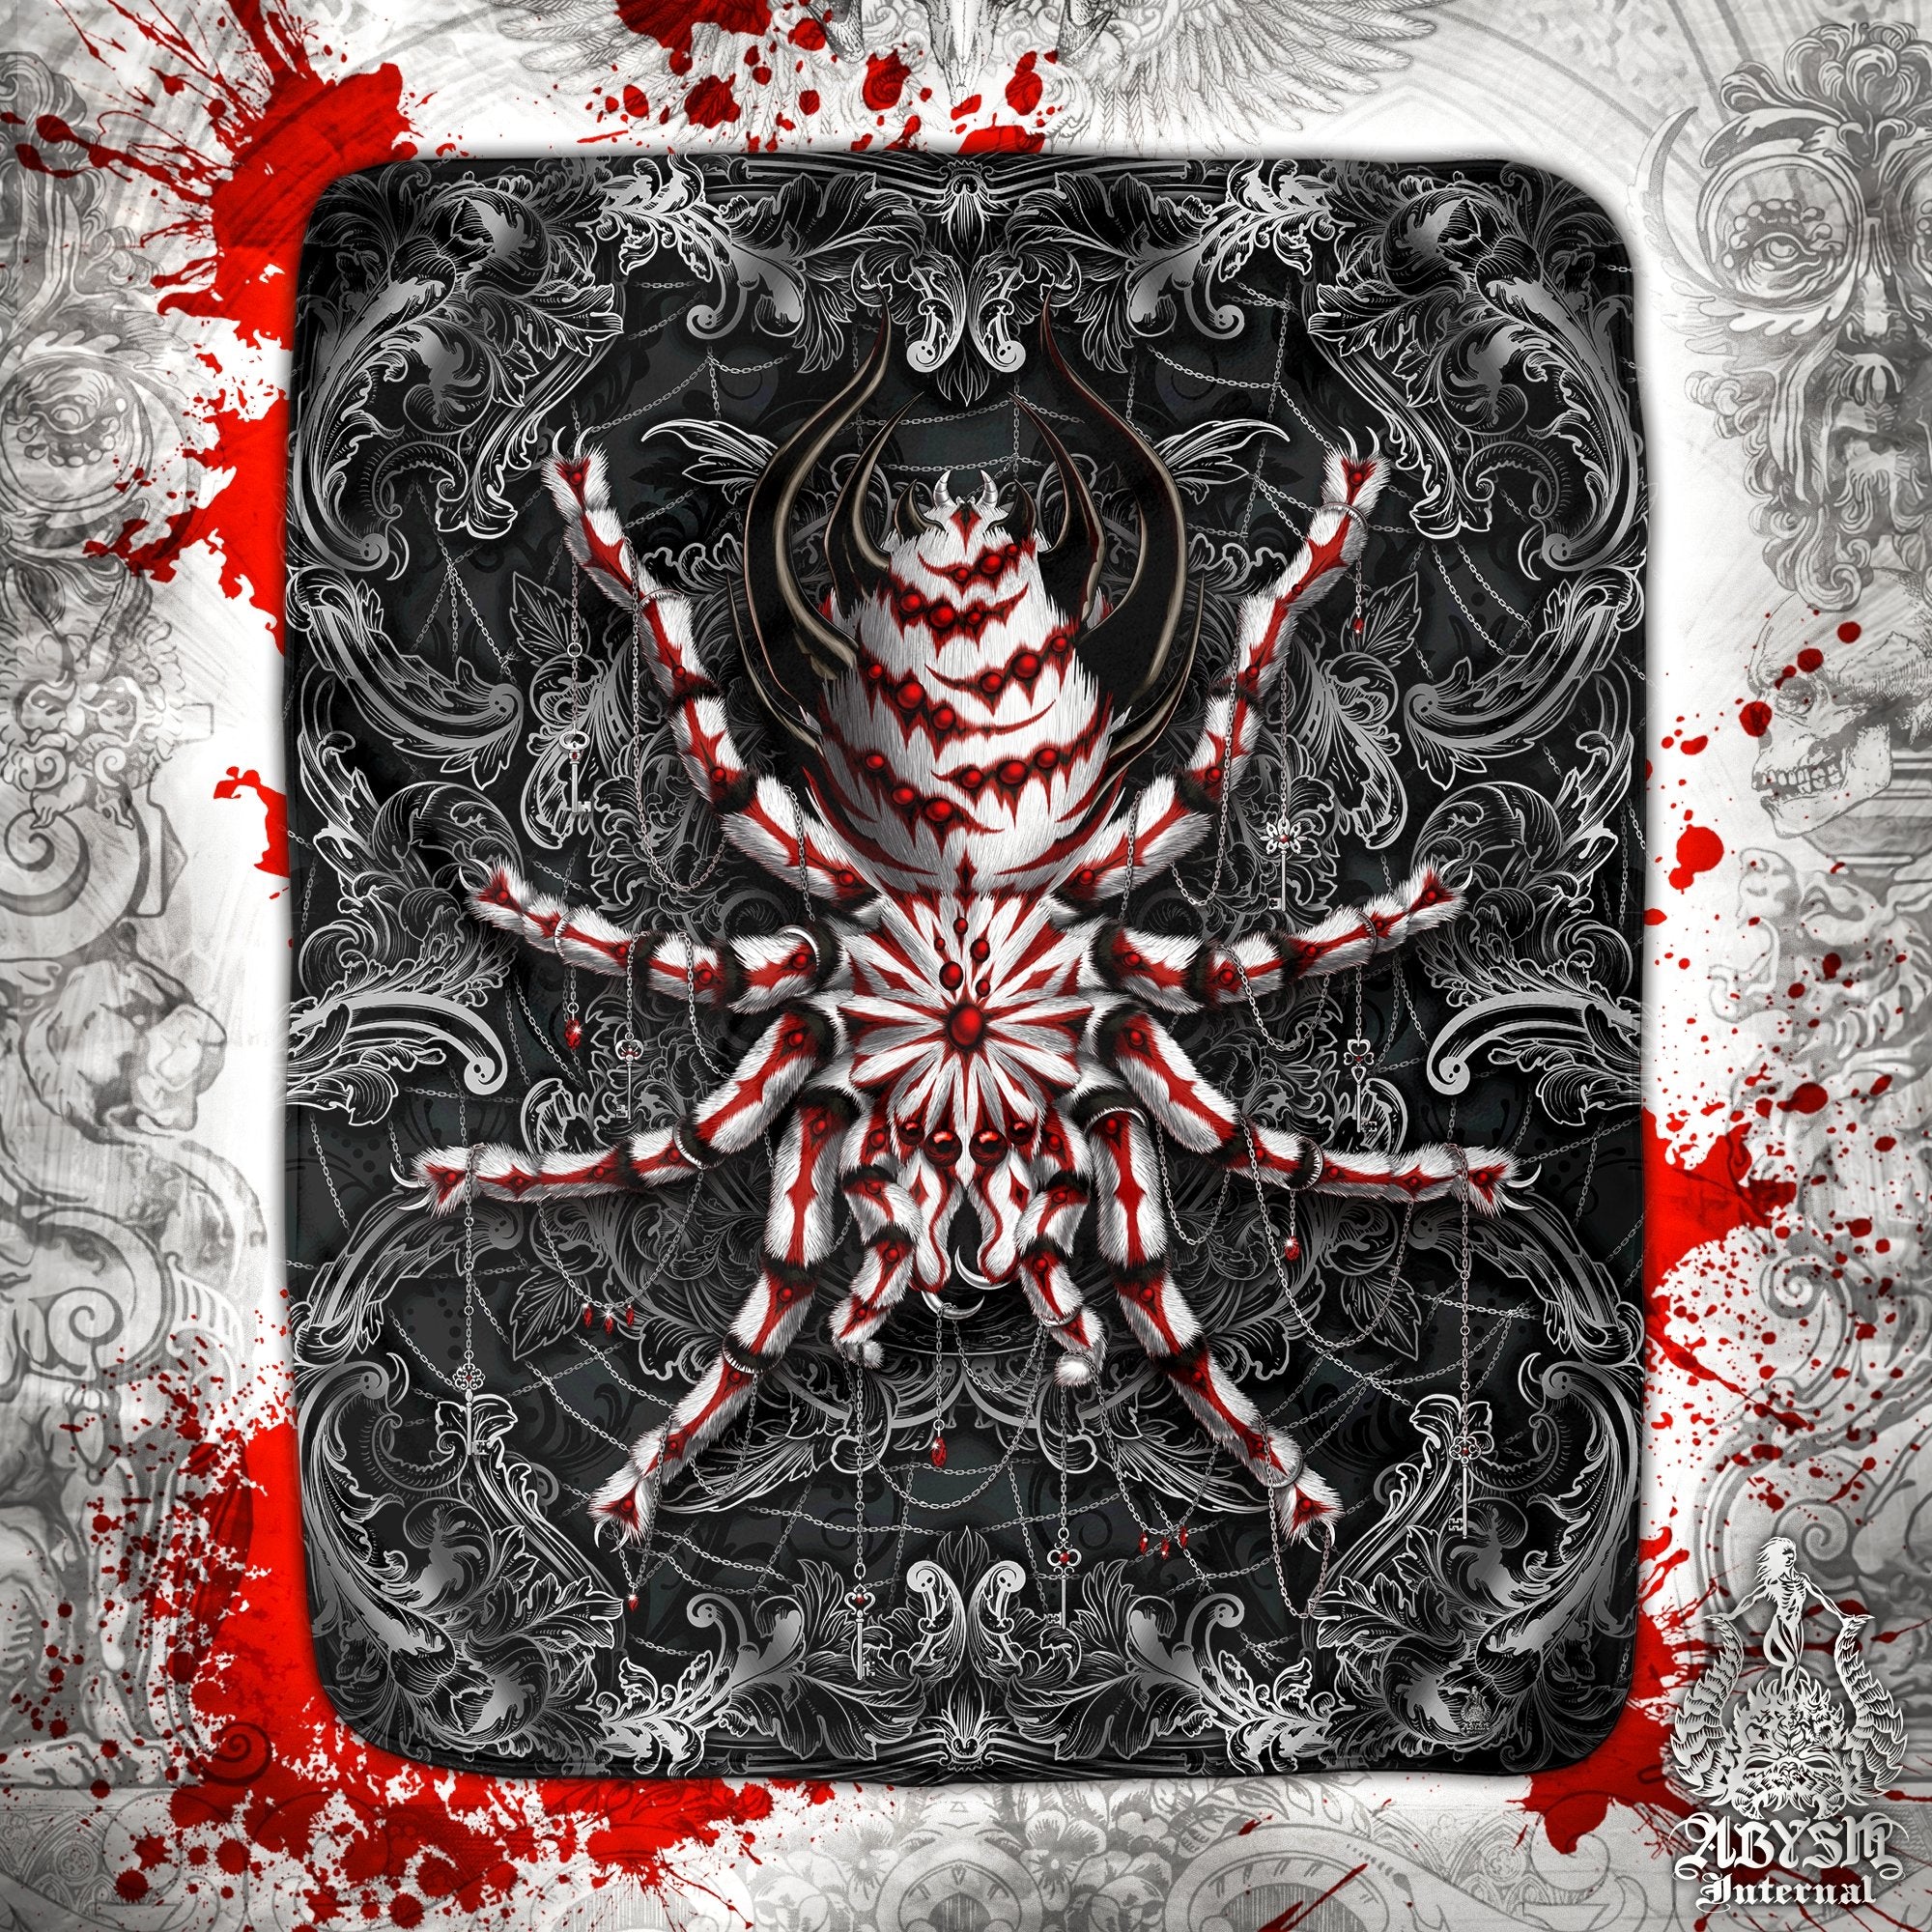 Spider Throw Fleece Blanket, Goth Gift, Gothic Home Decor, Alternative Art Gift - Dark, Tarantula Art - Abysm Internal